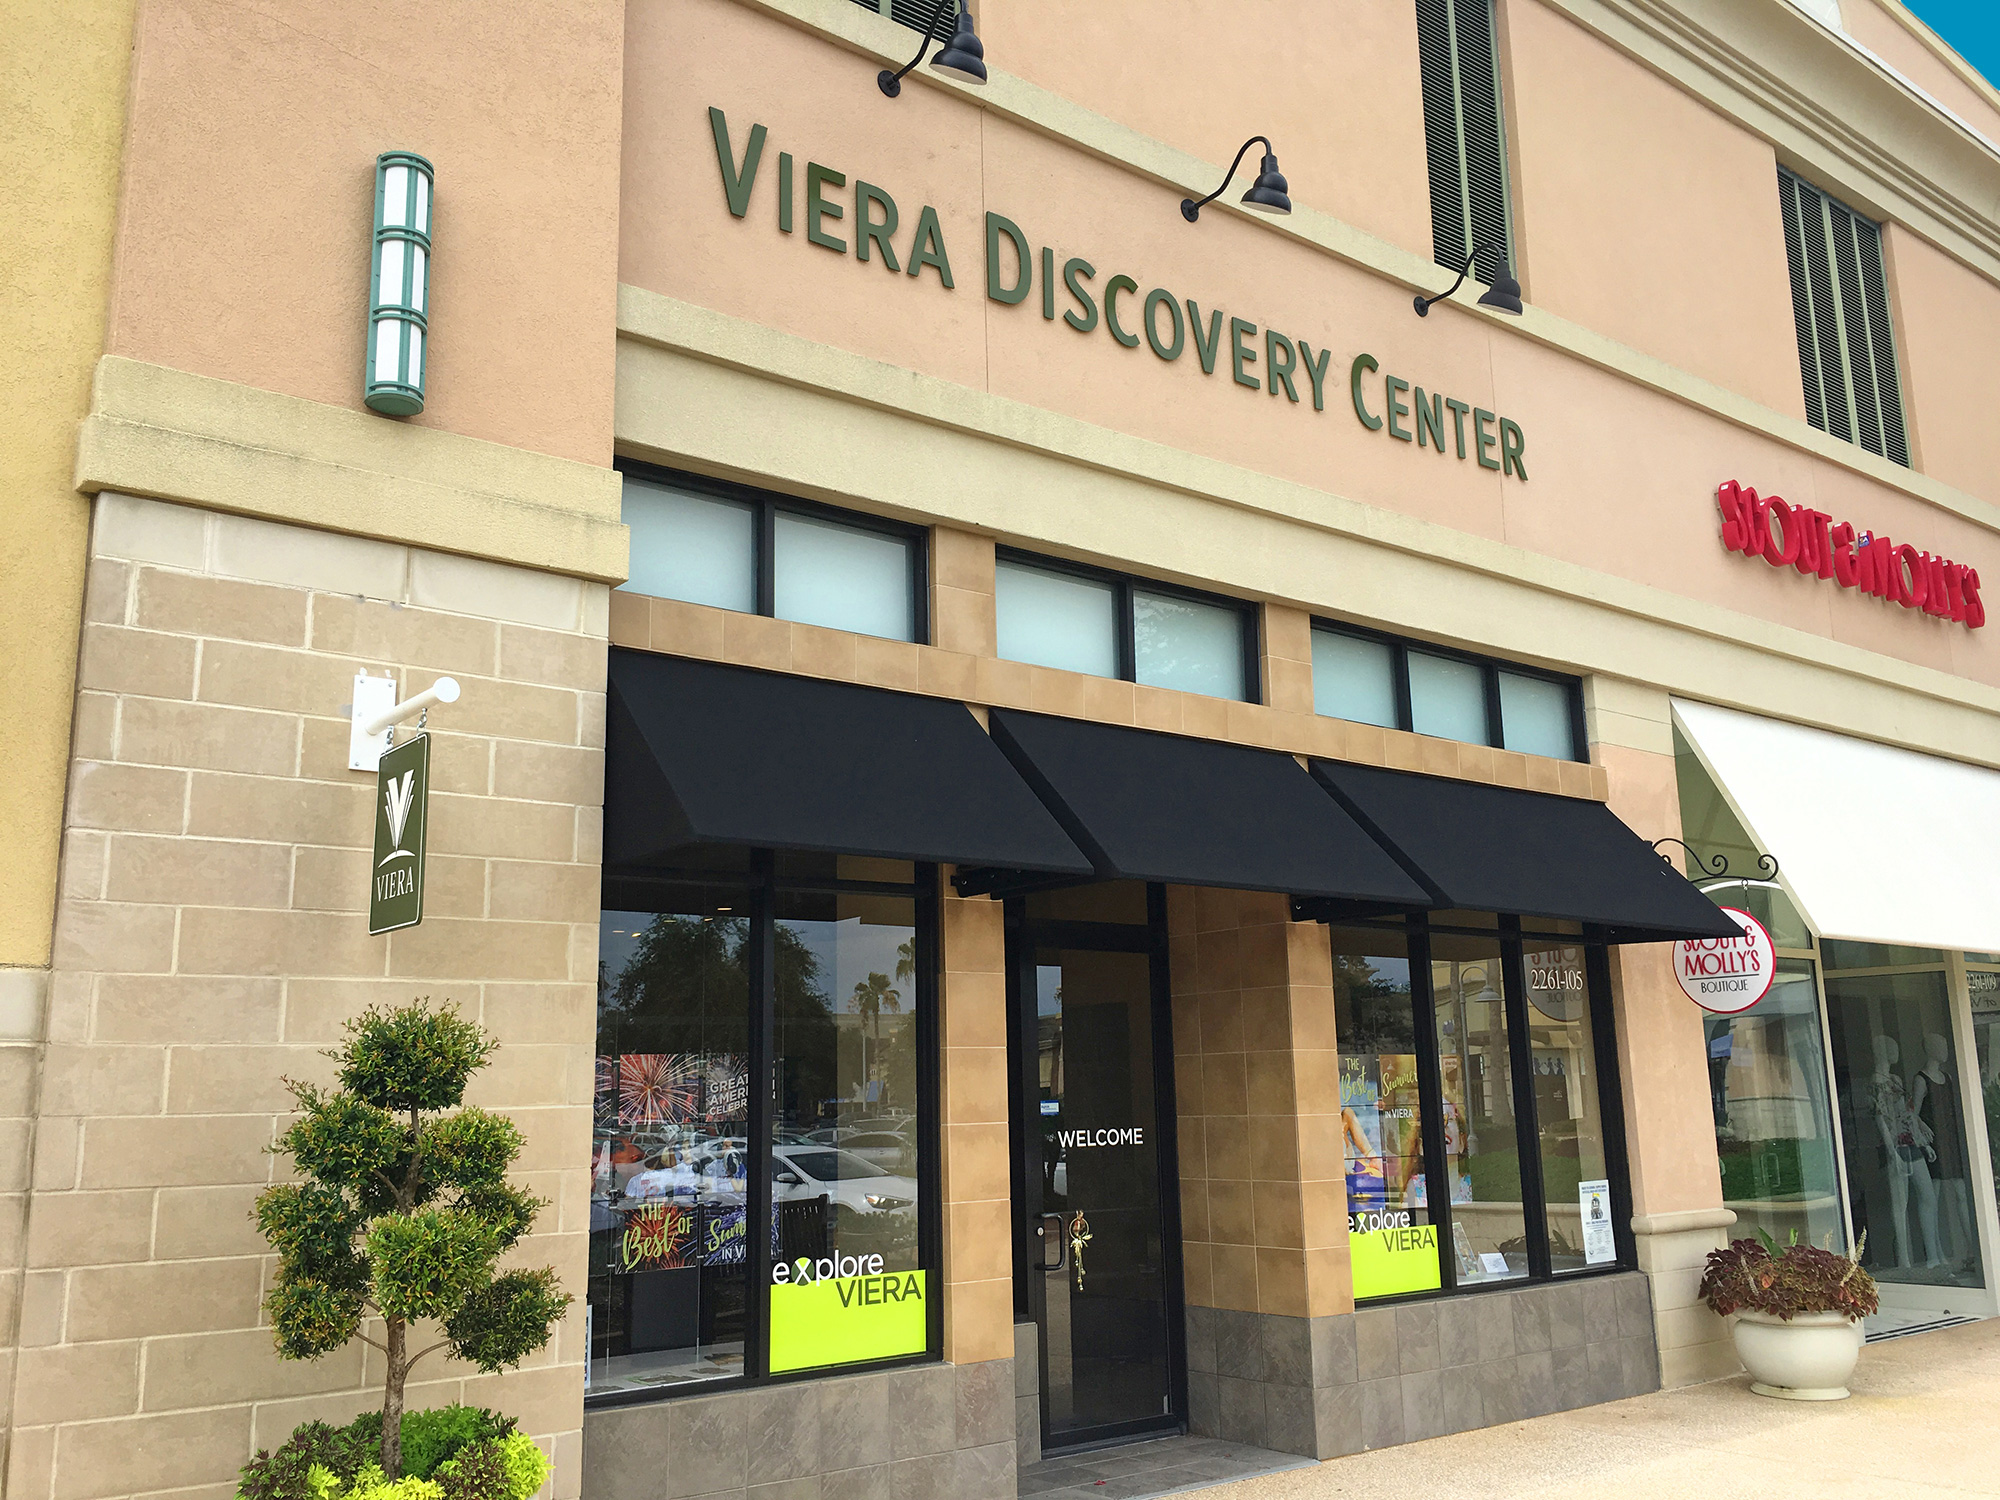 Viera Discovery Center Location image